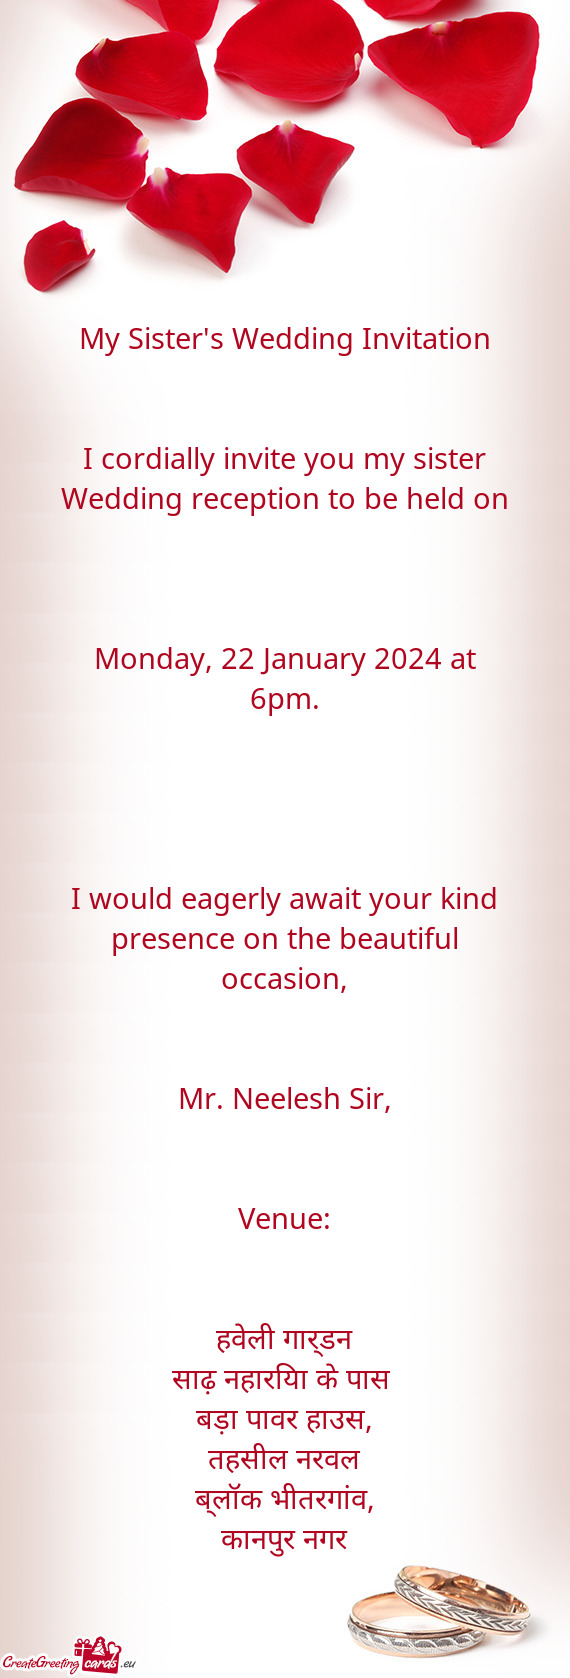 Mr. Neelesh Sir